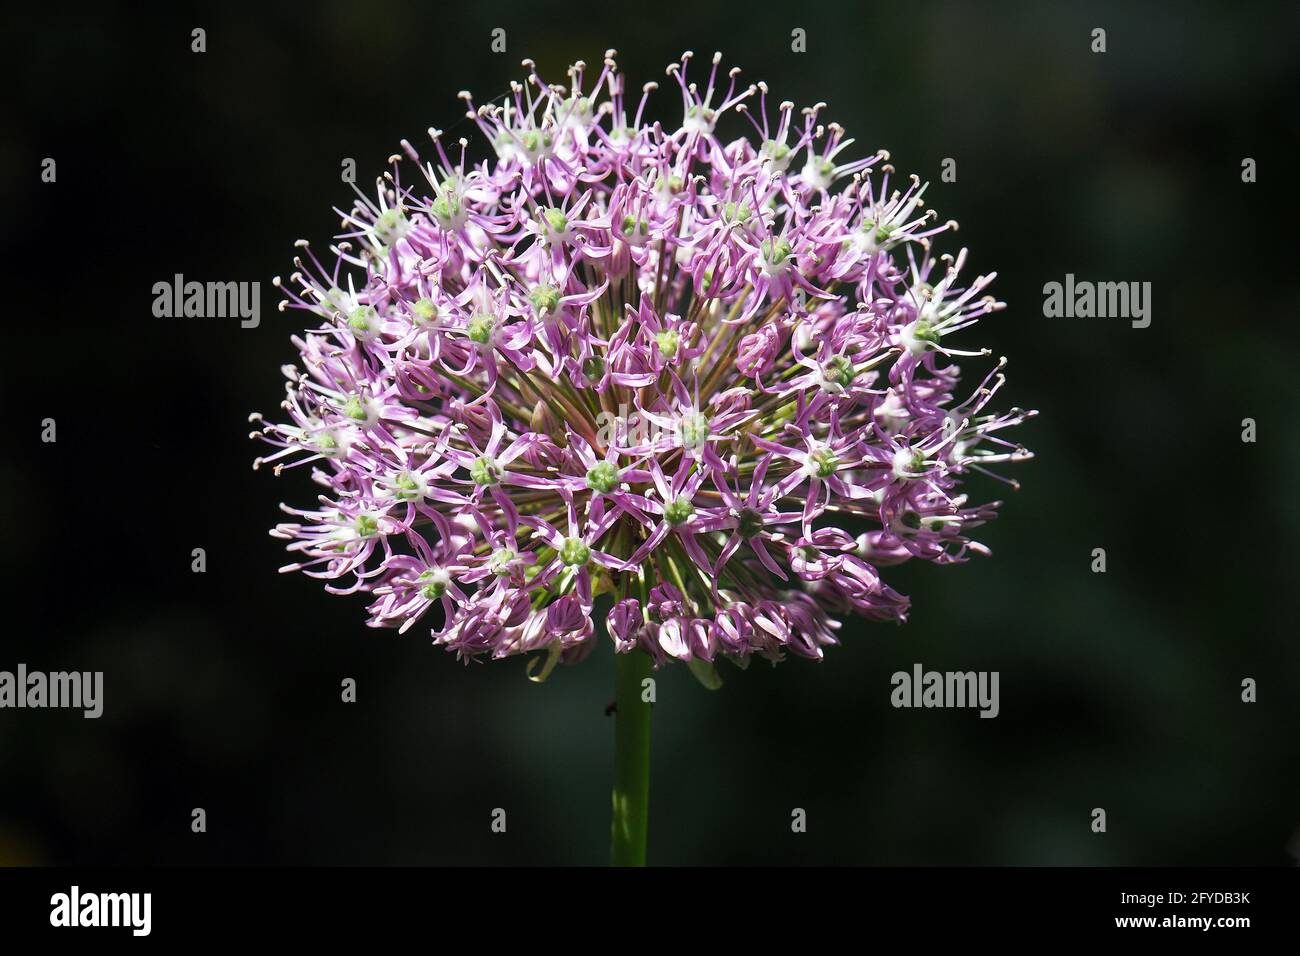 Fiore di cipolla, Lauch, Allium sp., hagyma, Budapest, Ungheria, Magyarország, Europa Foto Stock